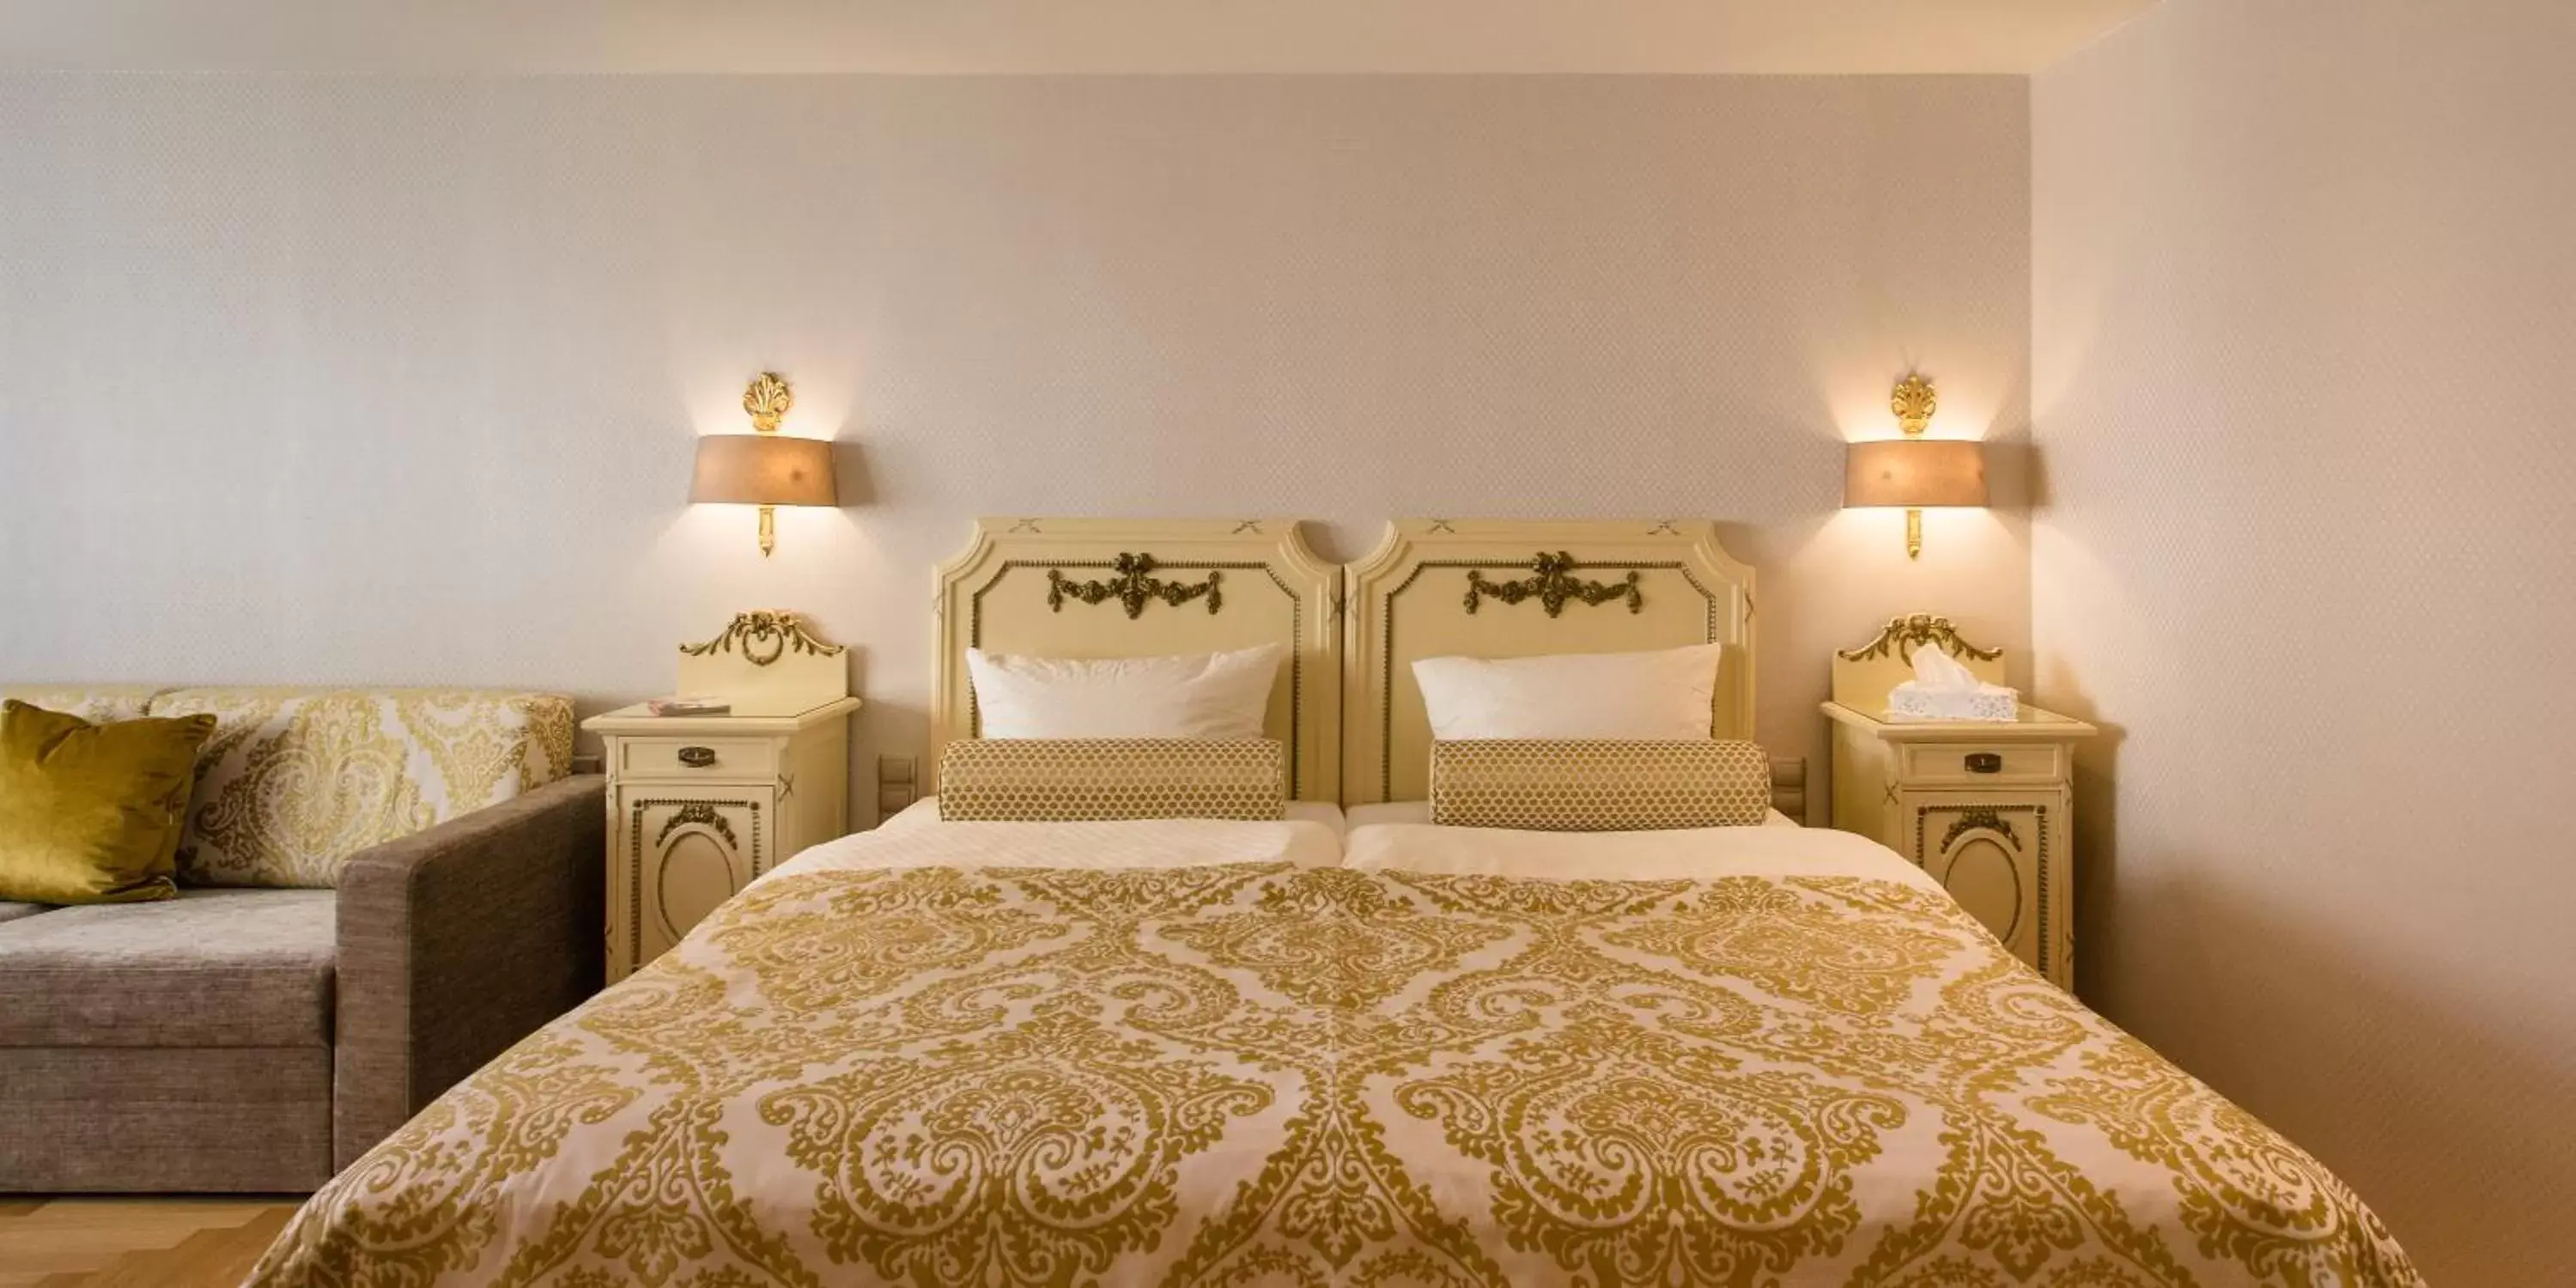 Bed, Room Photo in Romantik Hotel Markusturm